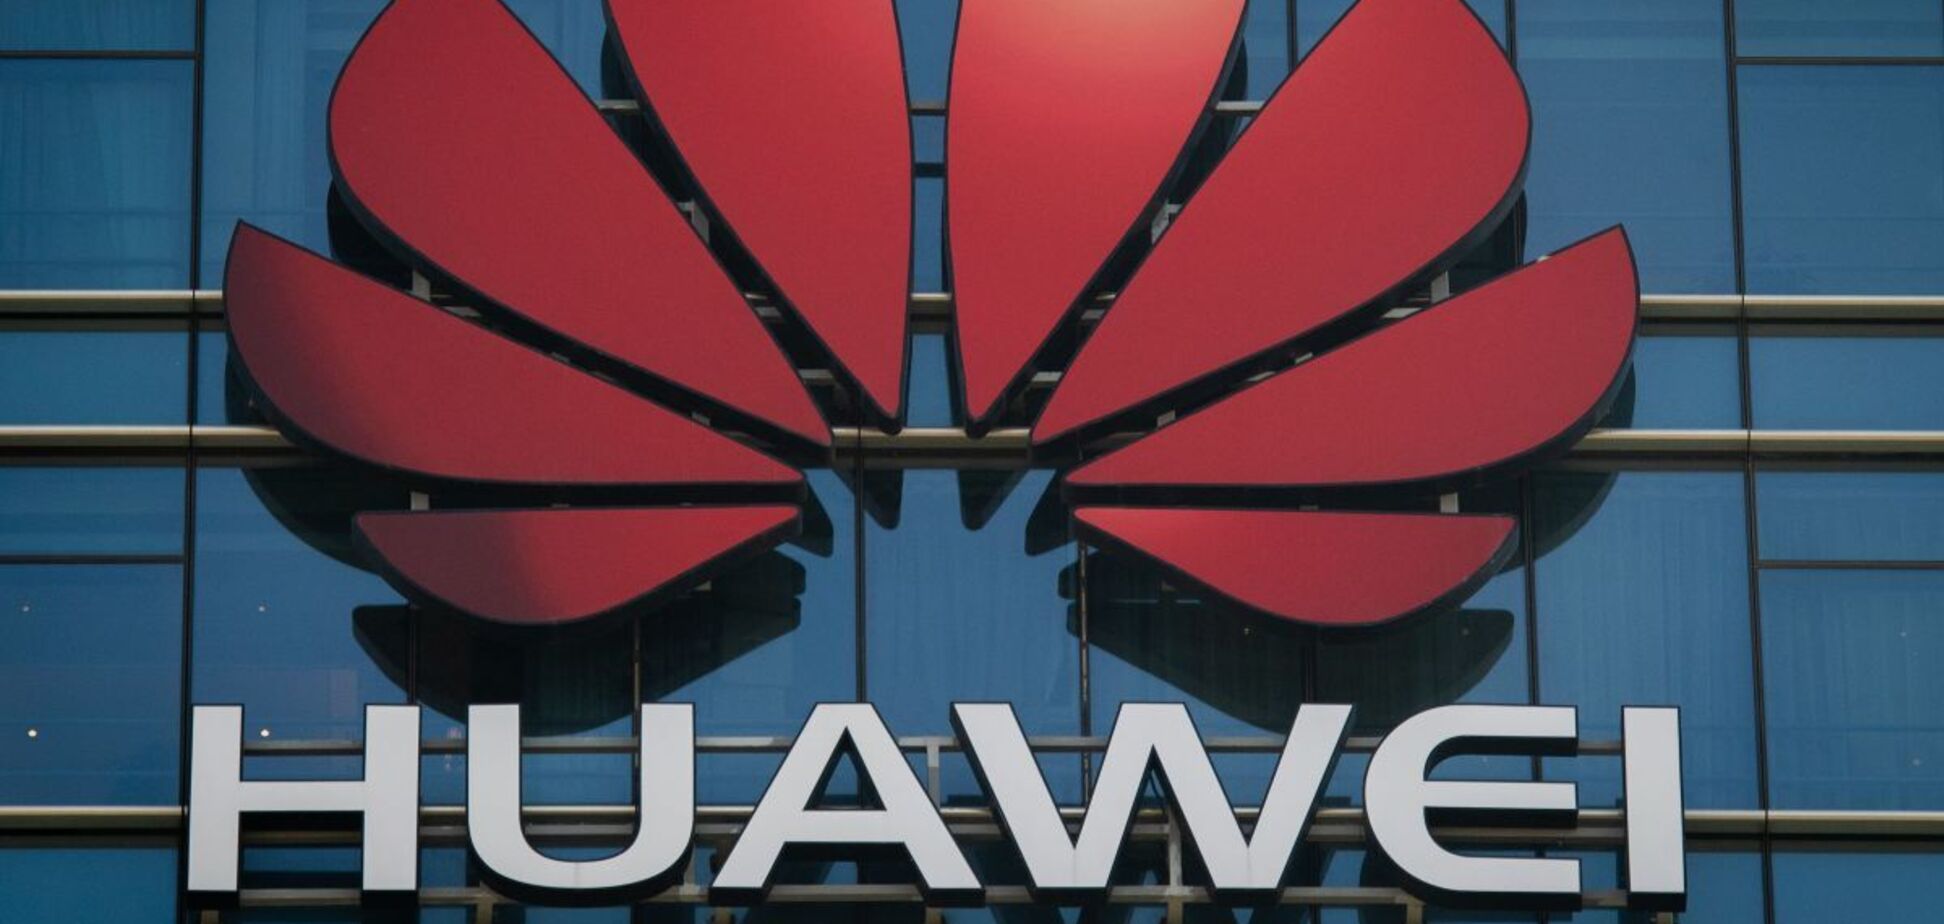 Лого Huawei